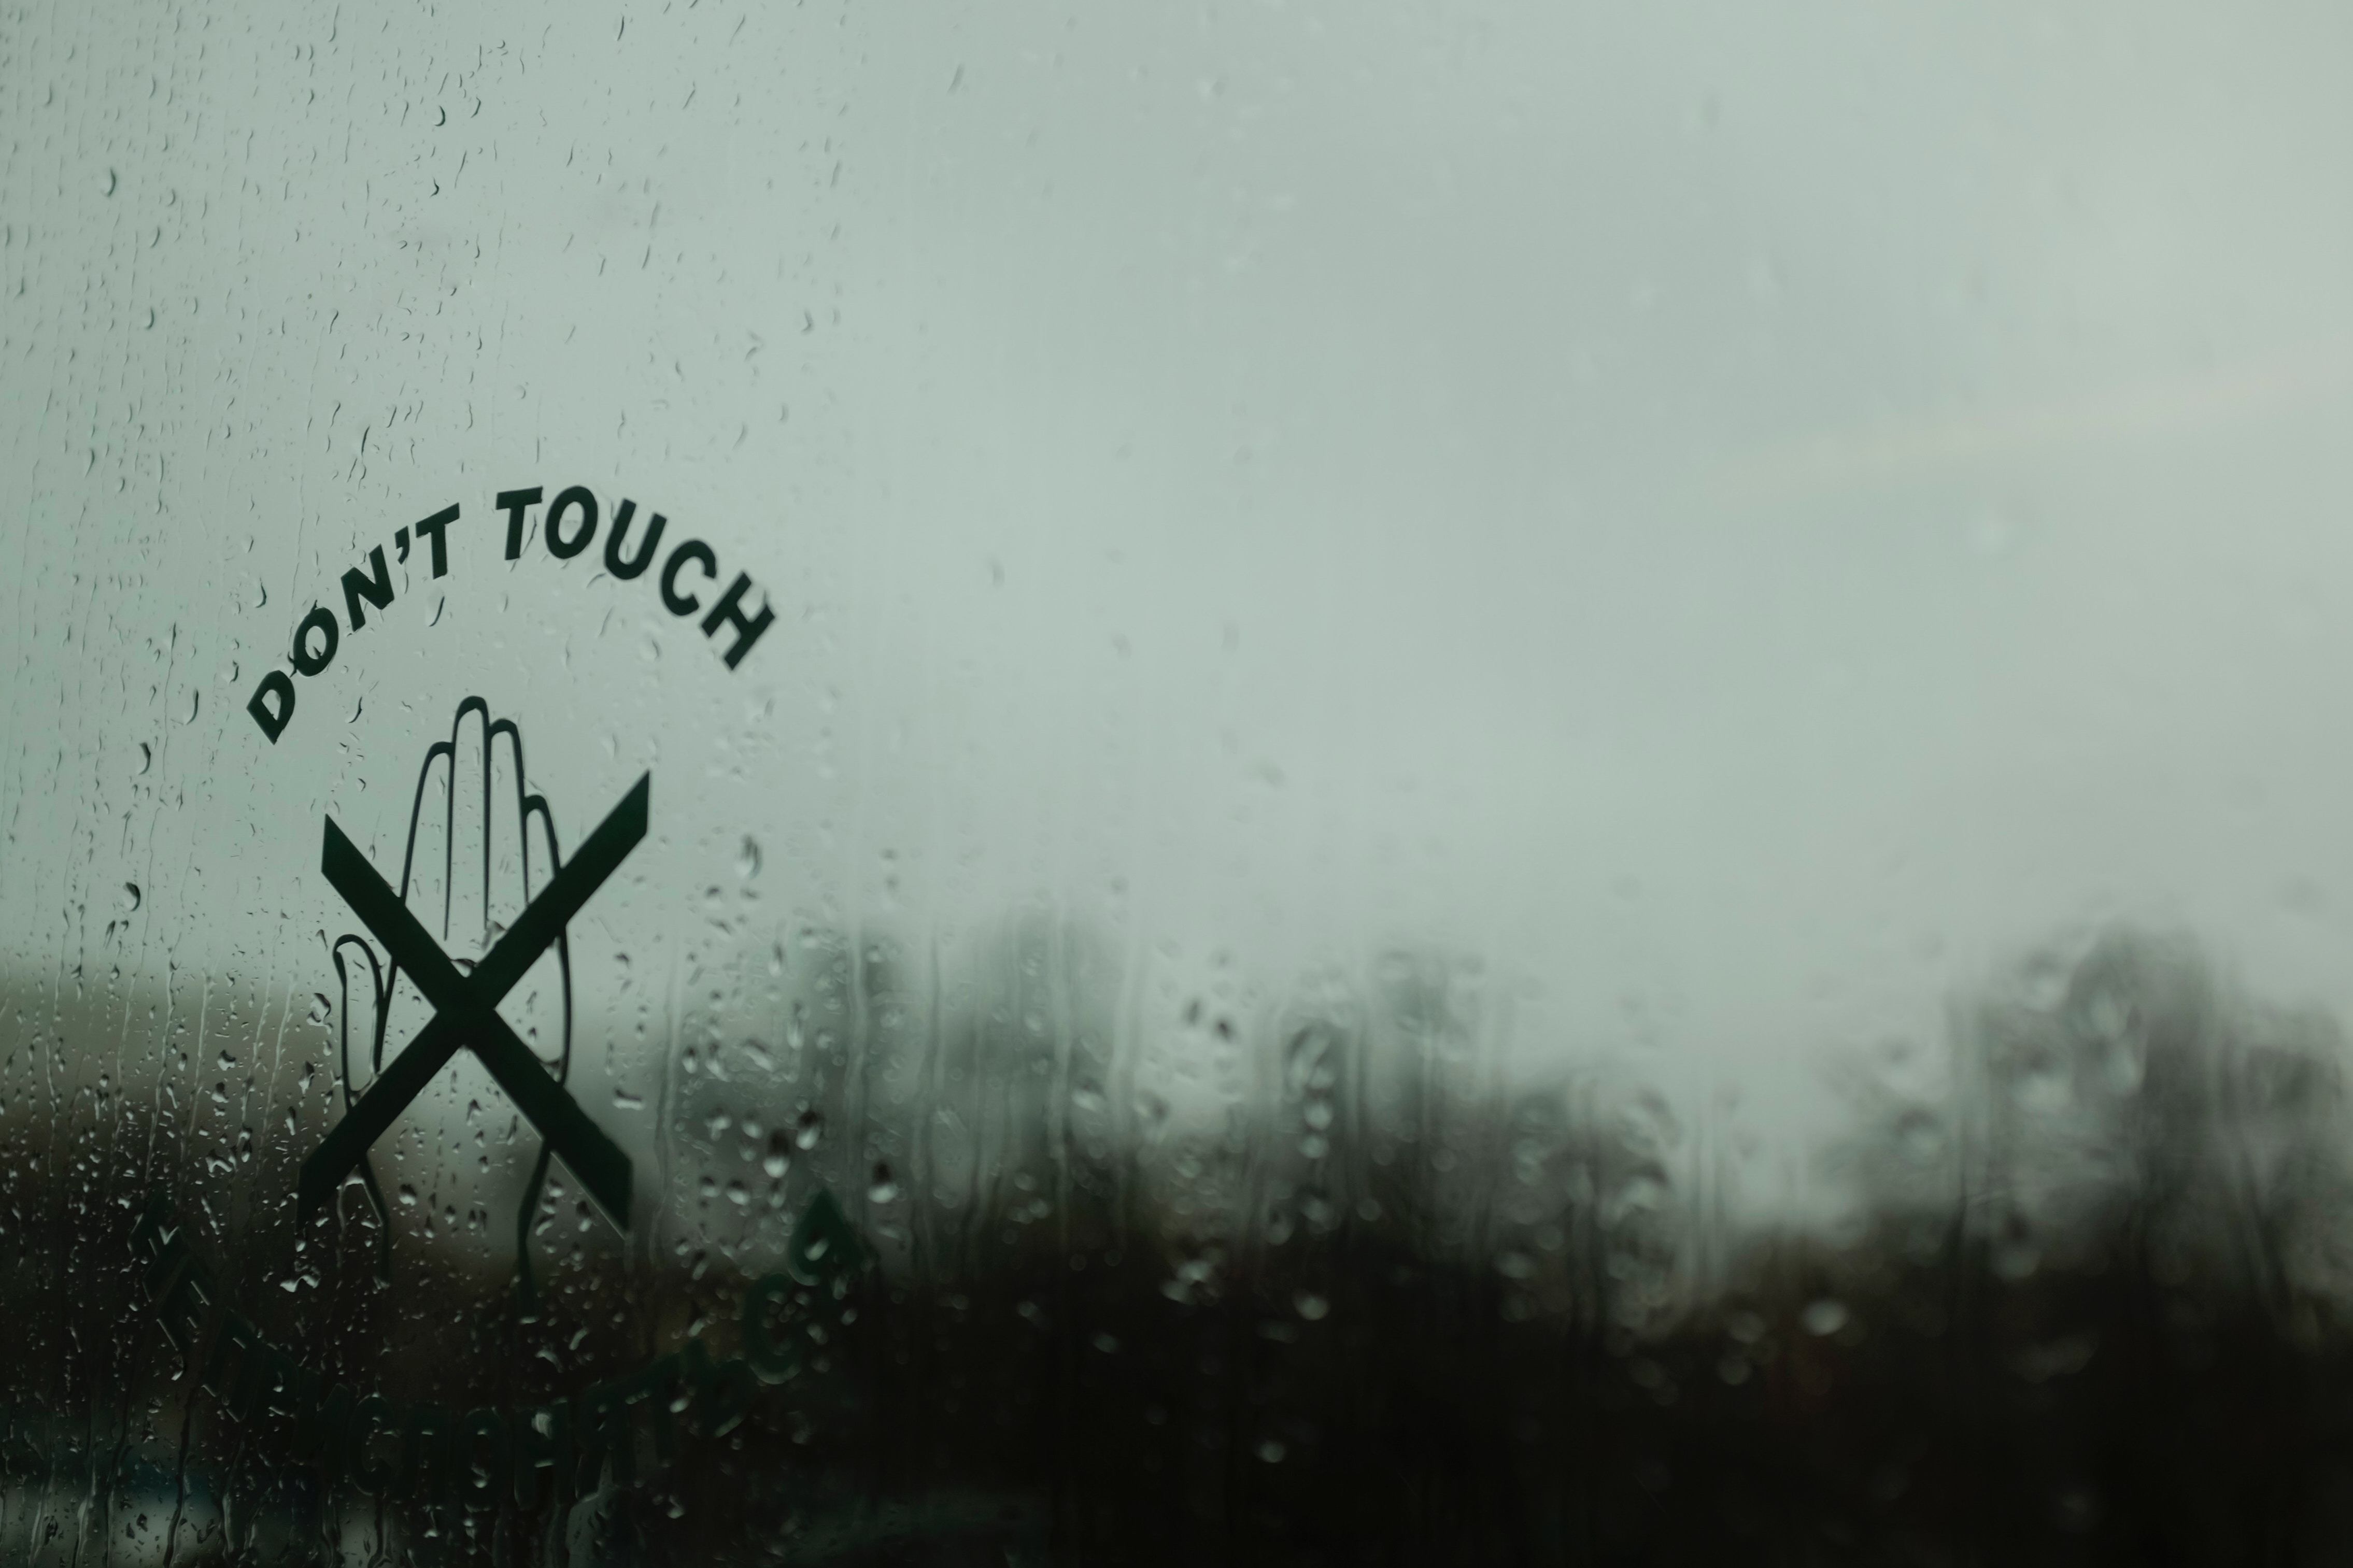 moisture, rain, drops, words, glass, inscription, touching, touch UHD